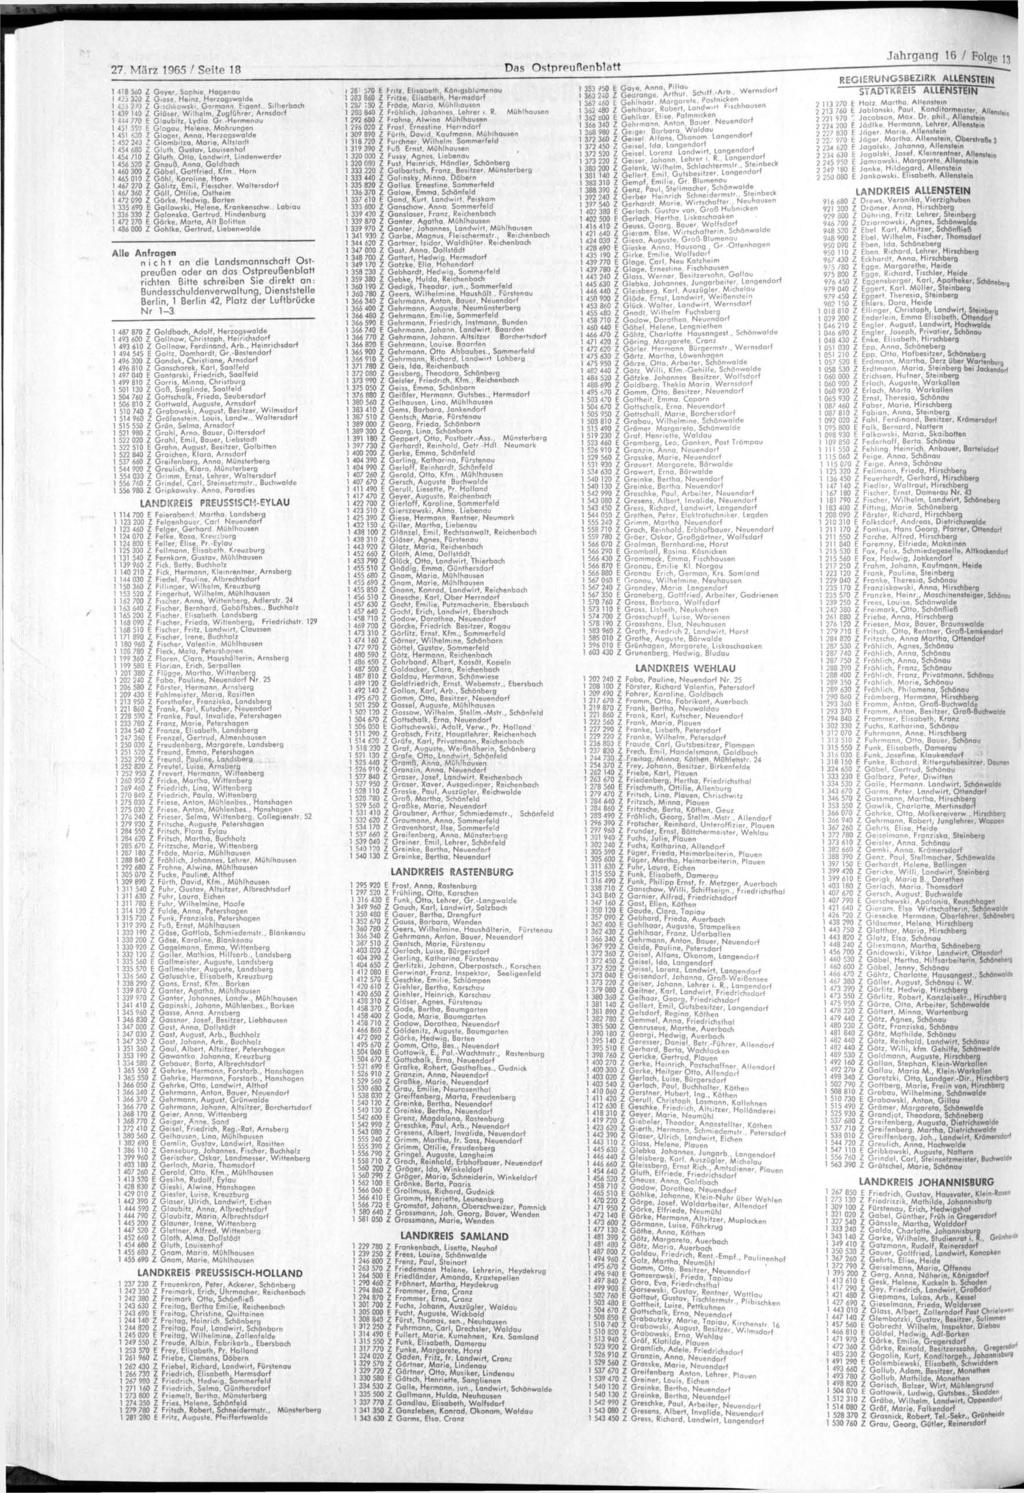 27. März 1965 / Seite 18 Das Ostpreußenblatt Jahrgang 16 / Folge 13 1 418 560 Z Geyer, Sophie. Hagenau I 42j 320 Z Giese, Heinz. Herzogswalde 1 435 290 Z G:schkowski, Germann, Eigent.